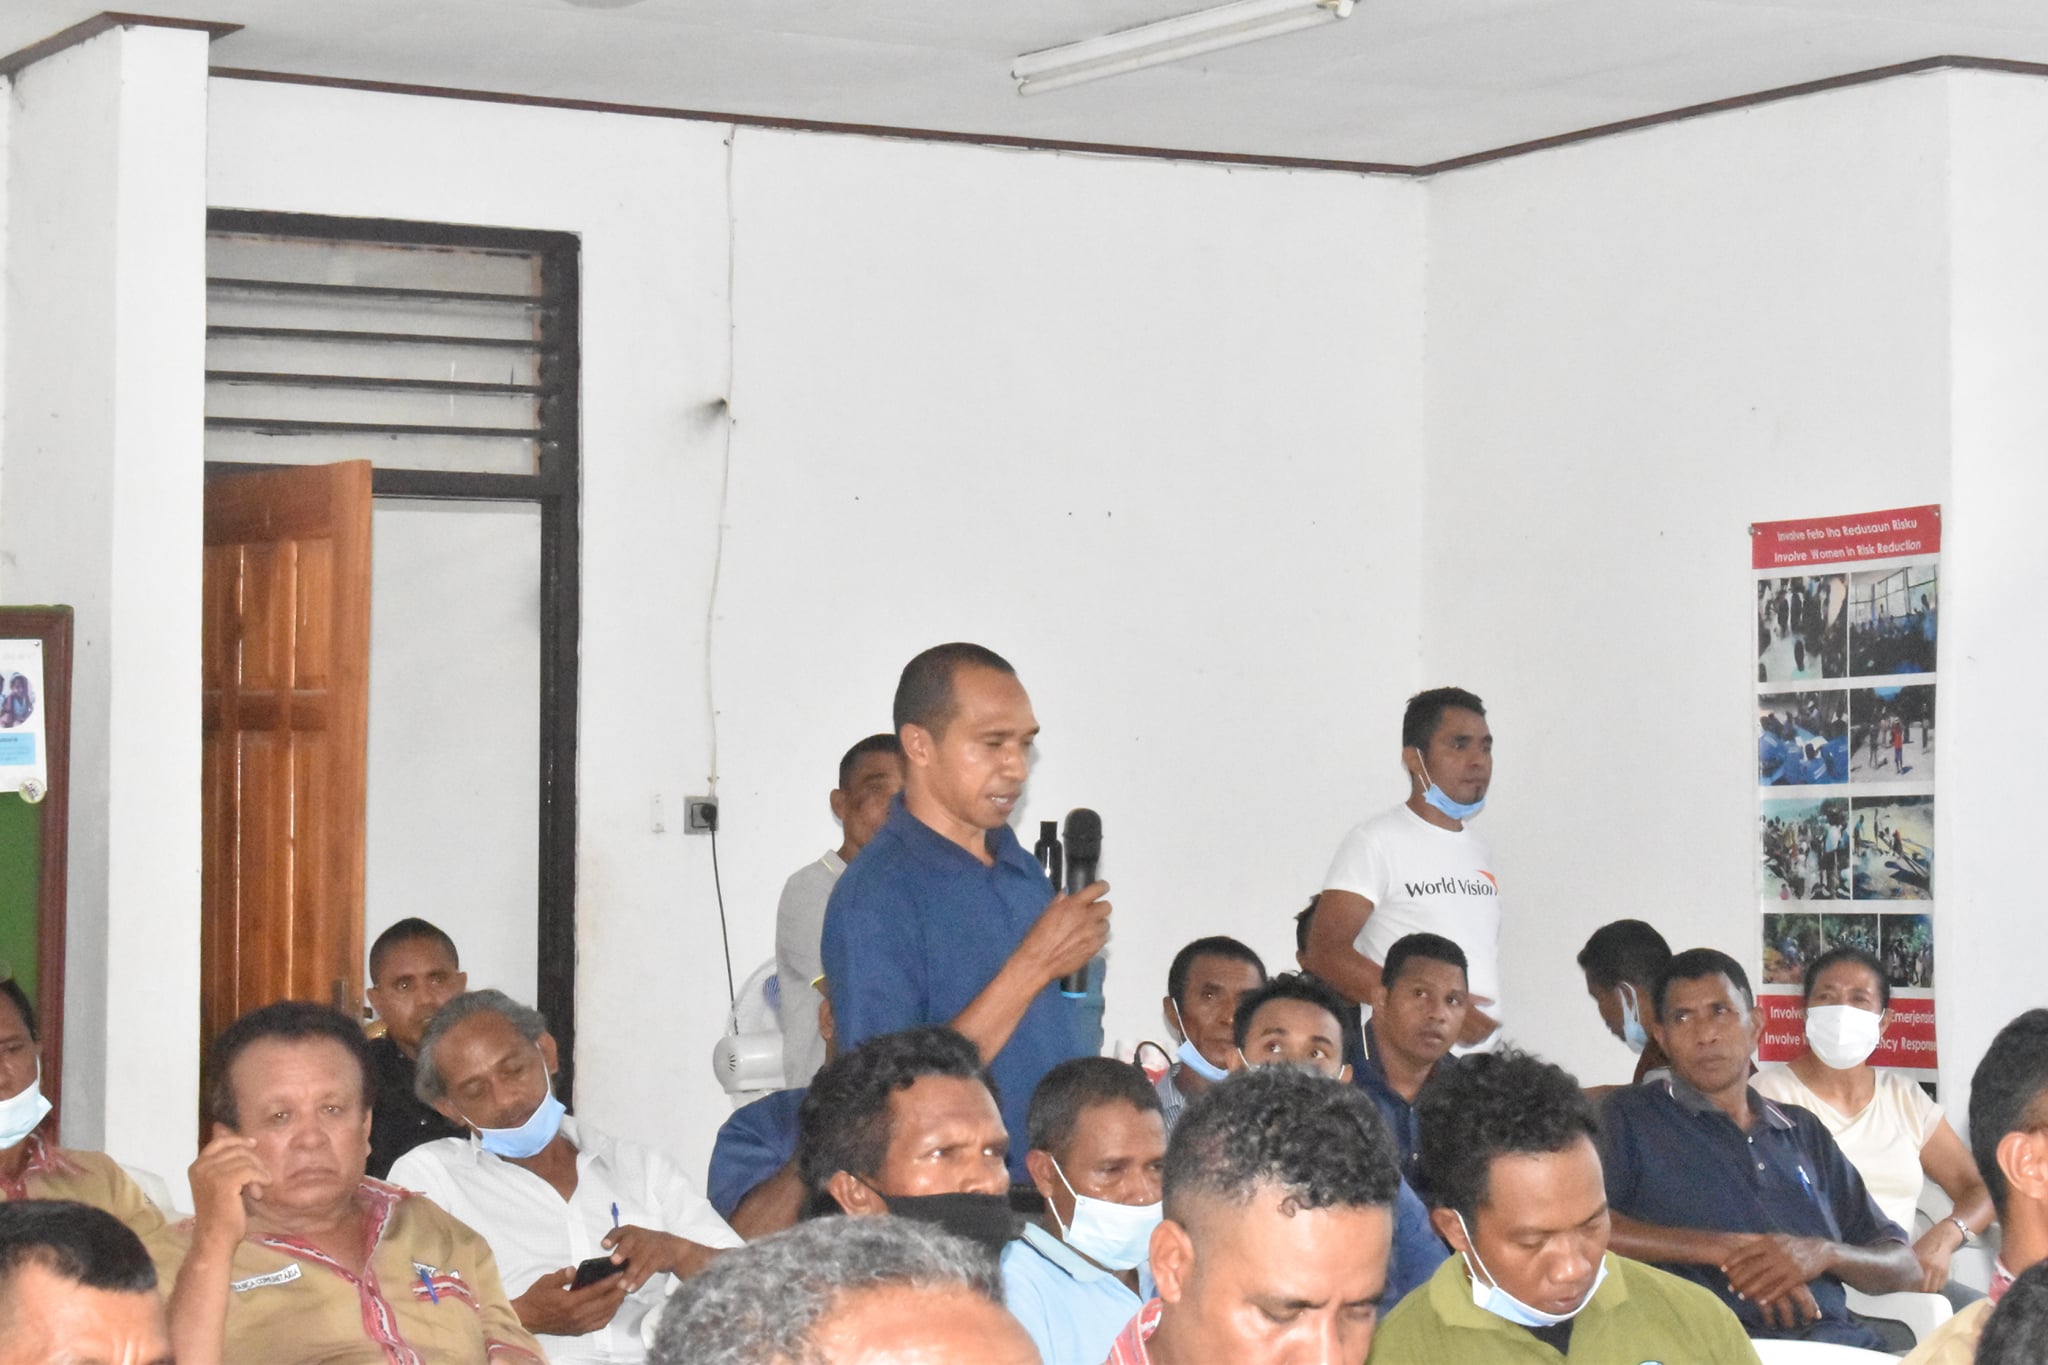 DNMG- liu husi Departemento Meteorologia hetan suporta husi World Vision Timor-Leste, fahe informasaun kona ba sistema alerta sedu iha munisipio BOBONARO iha loron 27 fulan Outobro 2021